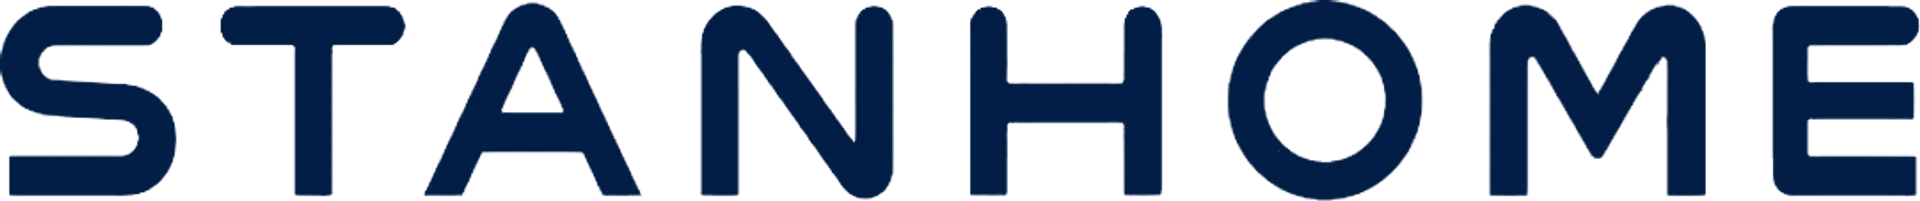 STANHOME logo